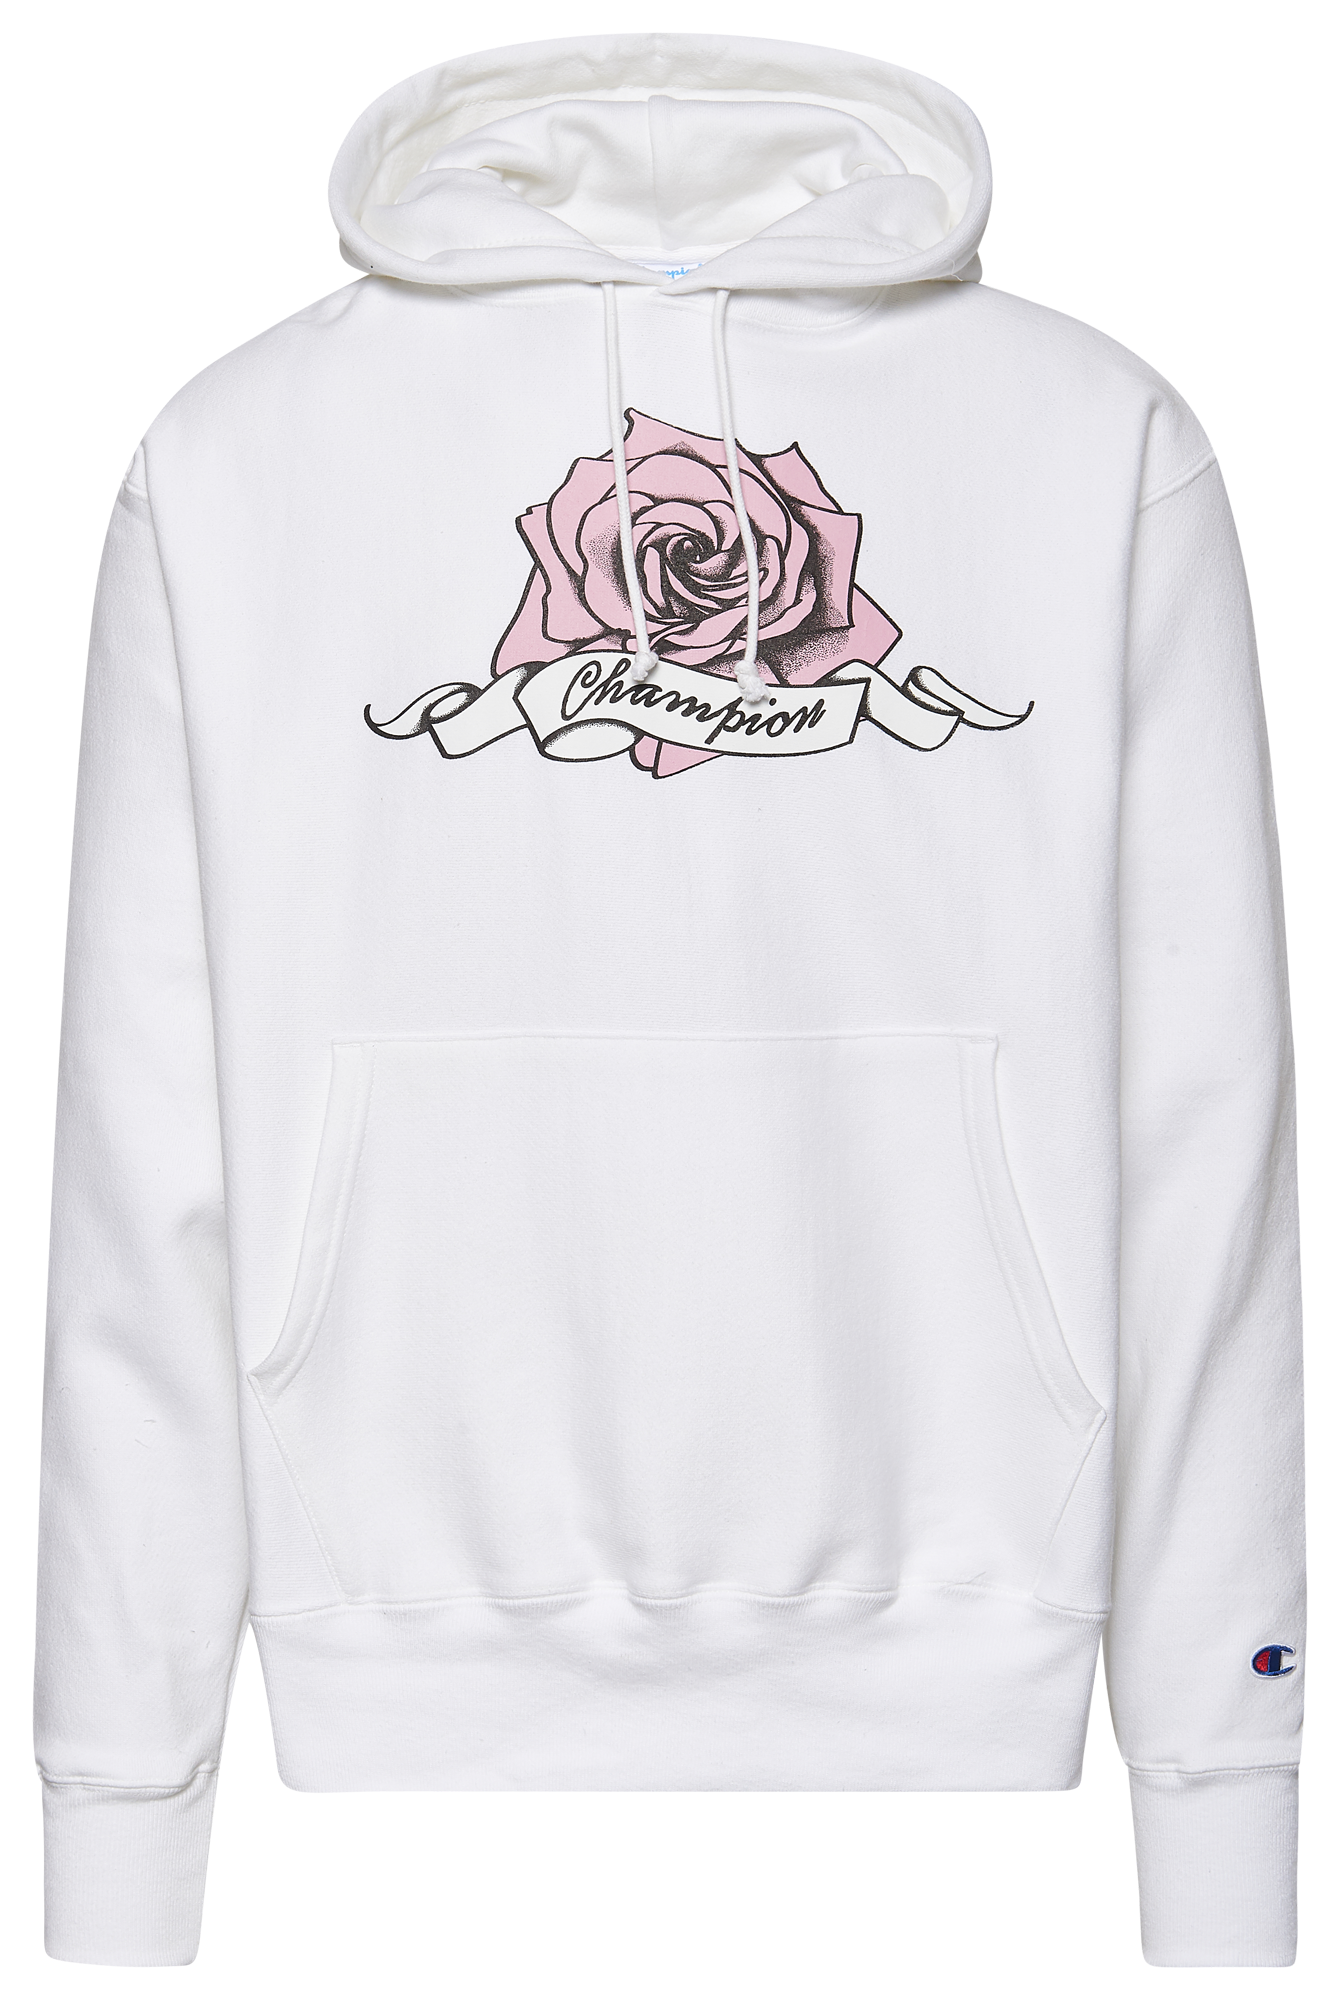 hoodie champion rose